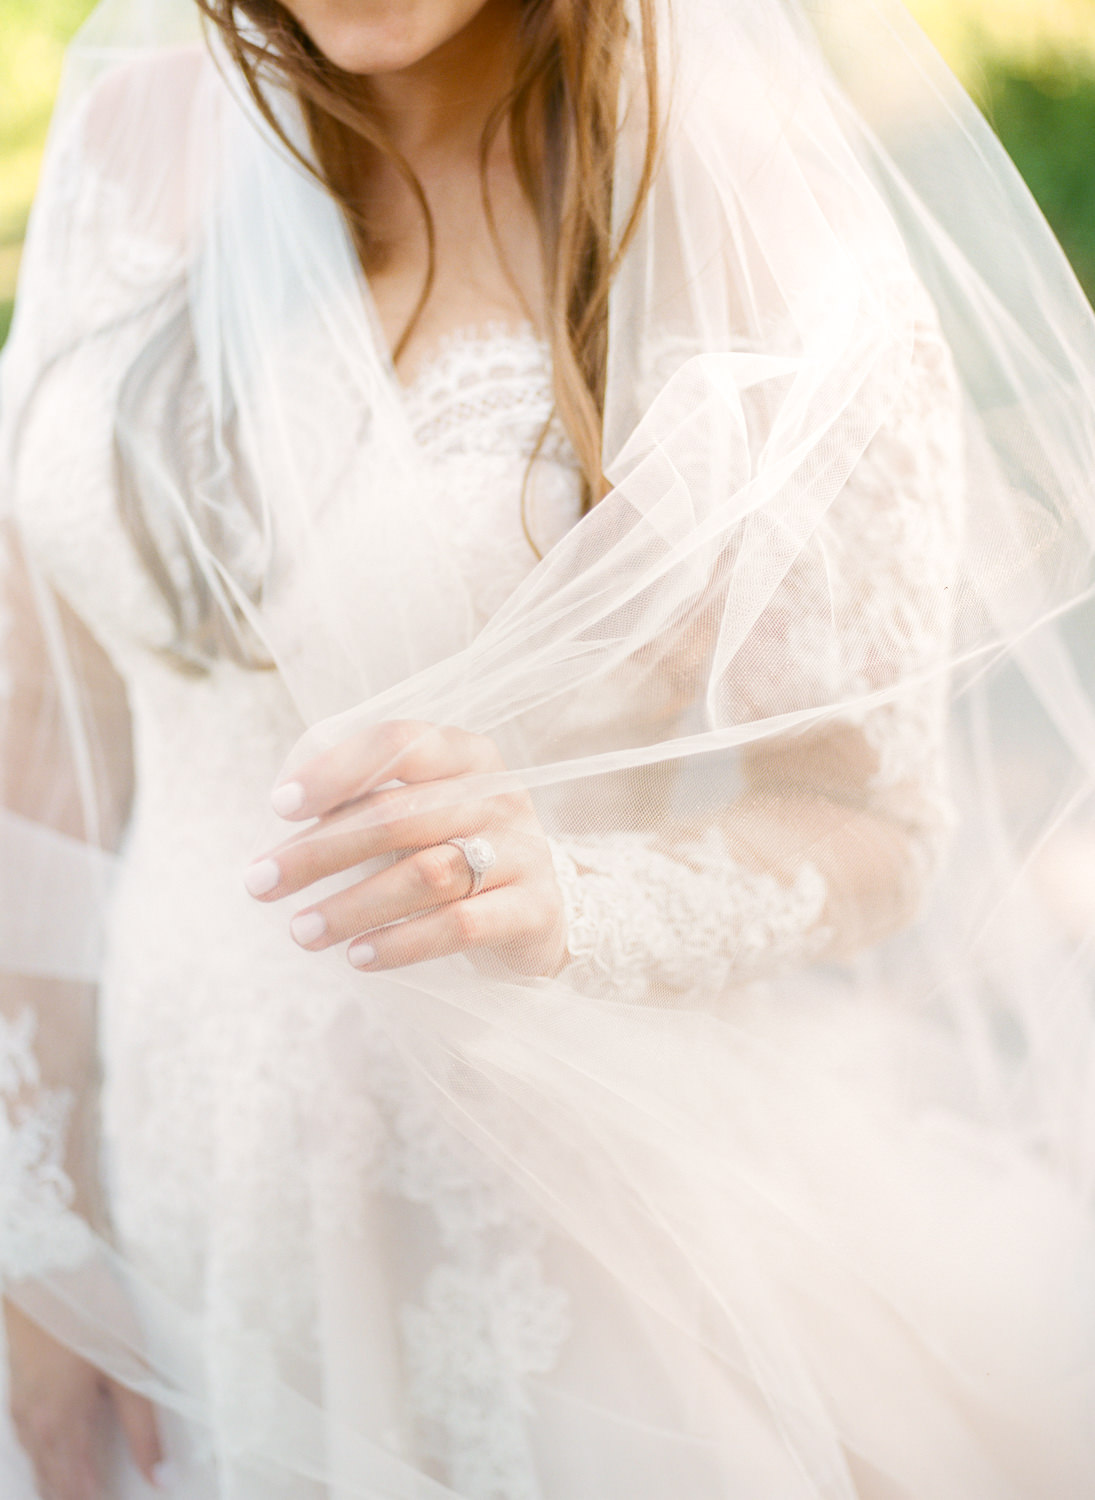 Bride with veil; St. Louis fine art film wedding photographer Erica Robnett Photography